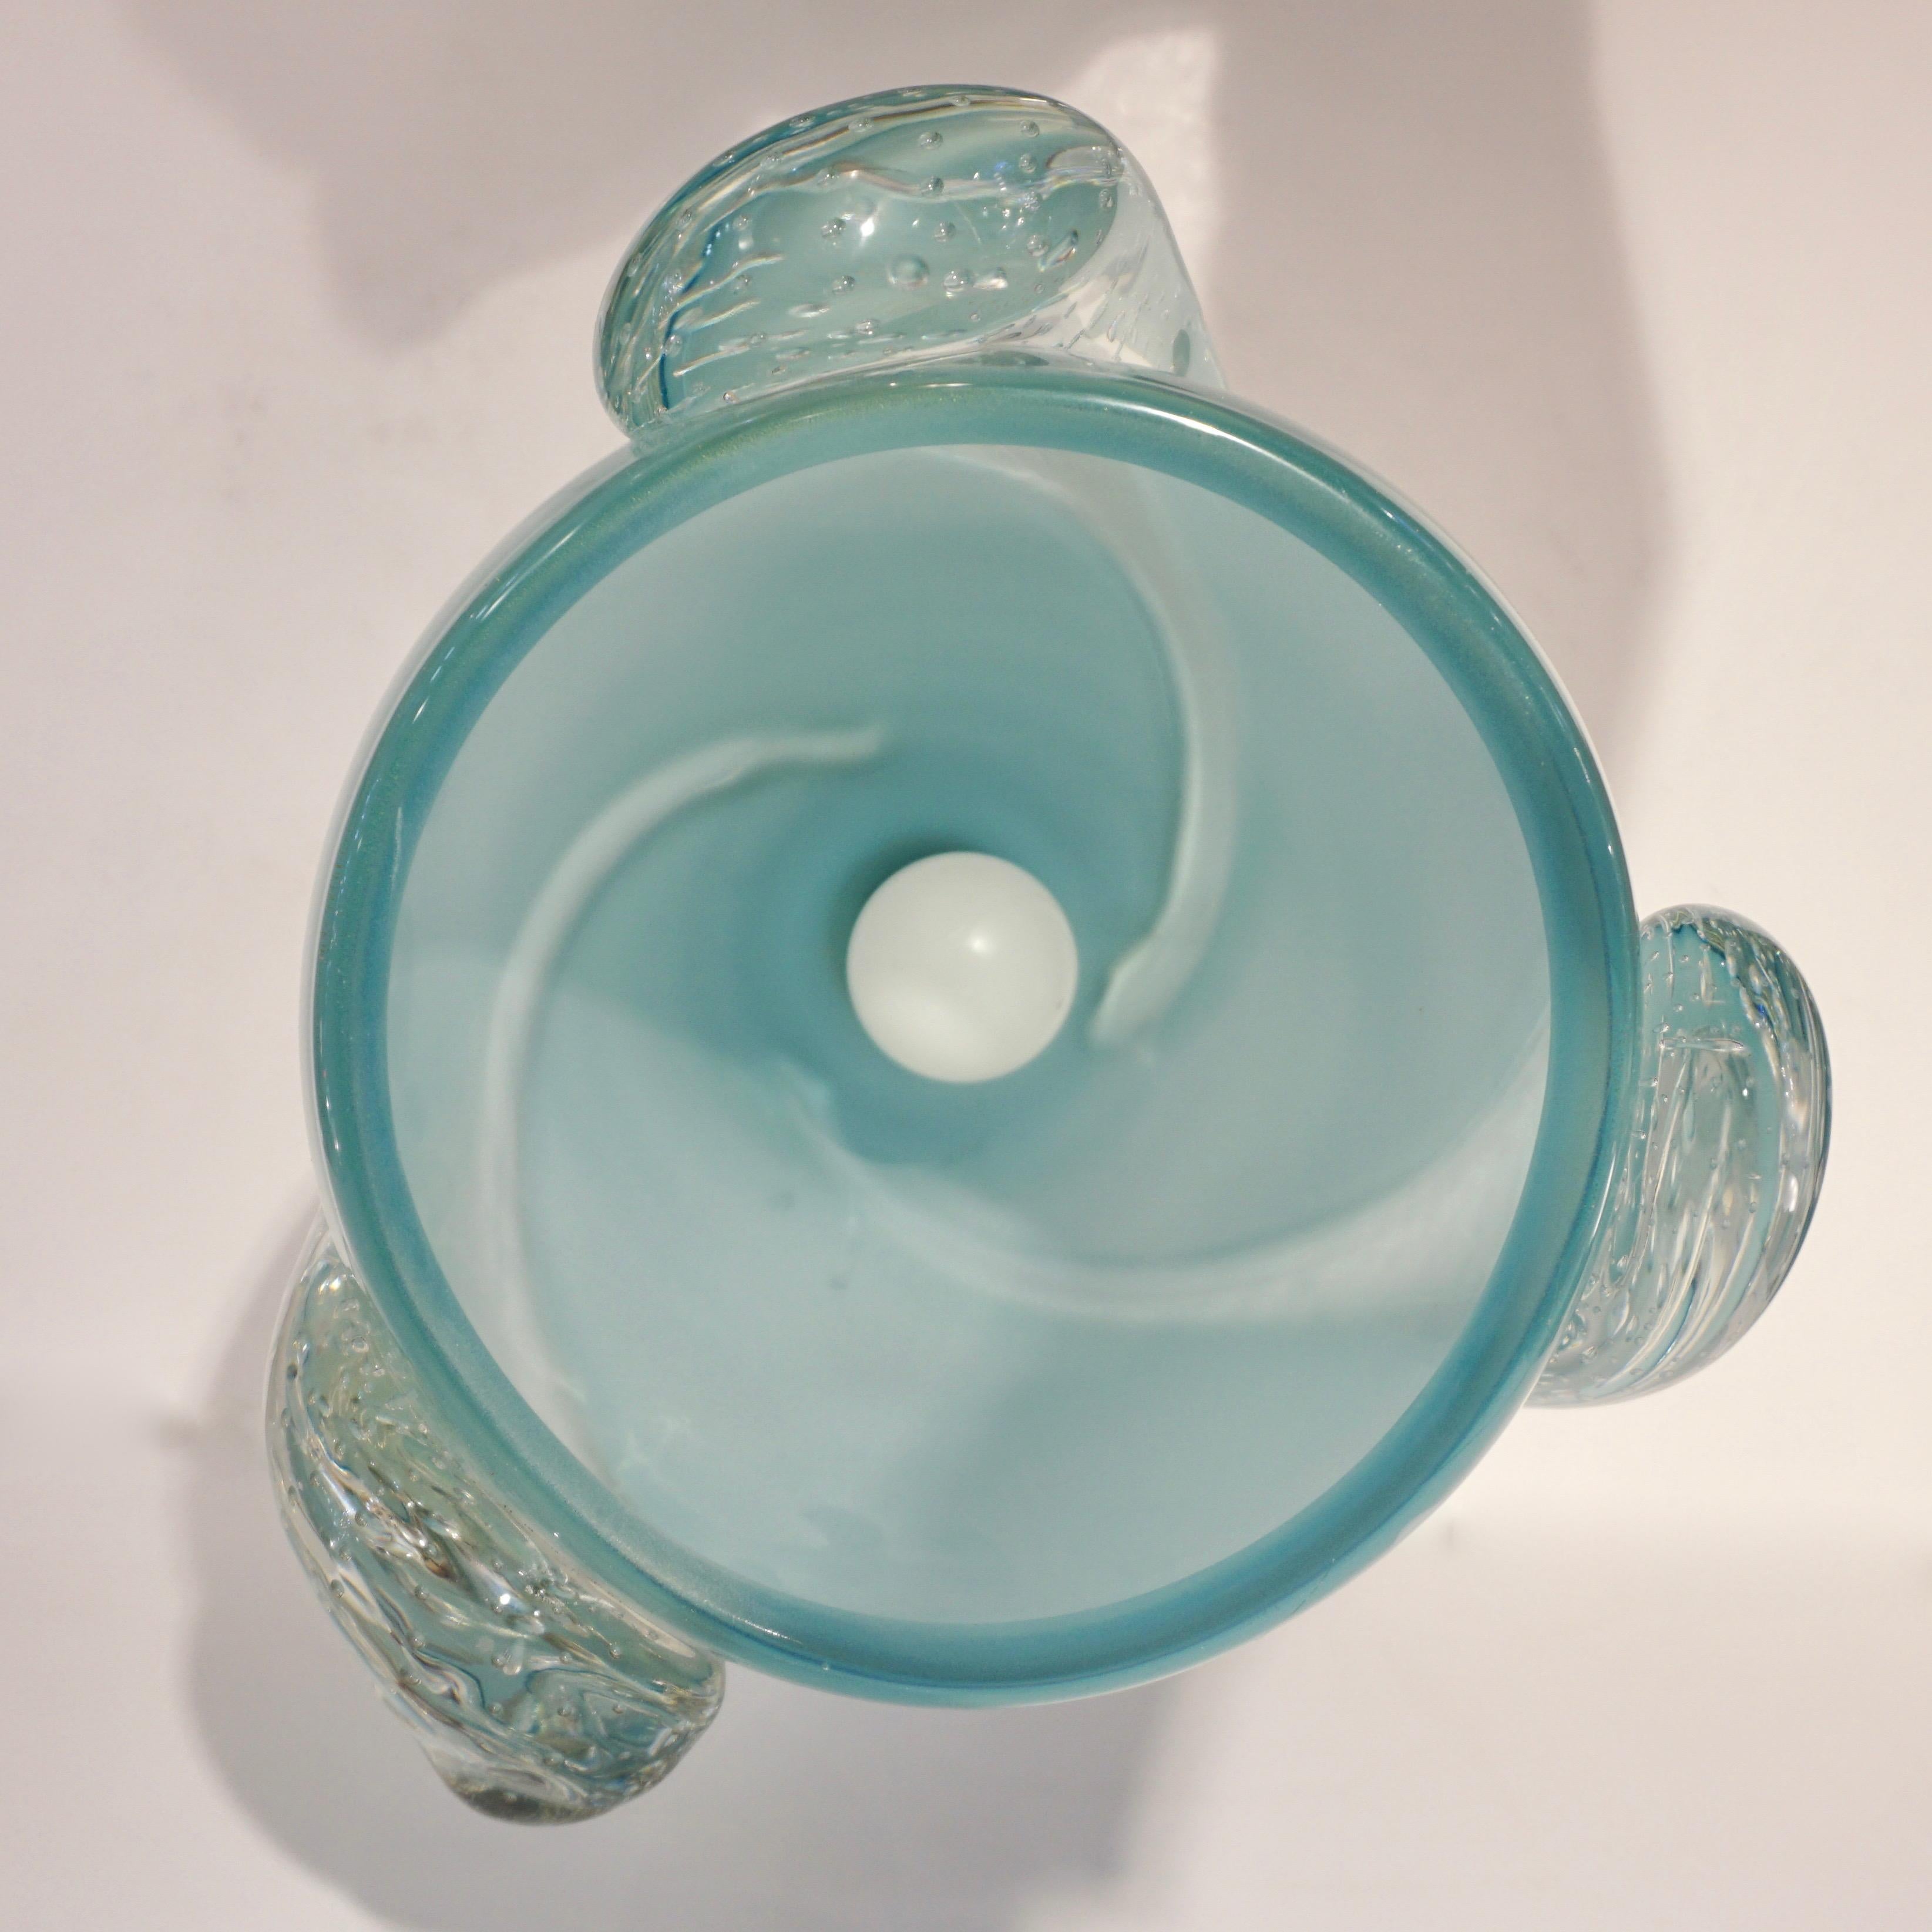 Barovier Toso Contemporary Italian Modern Aqua Blue Murano Glass Organic Lamp For Sale 5